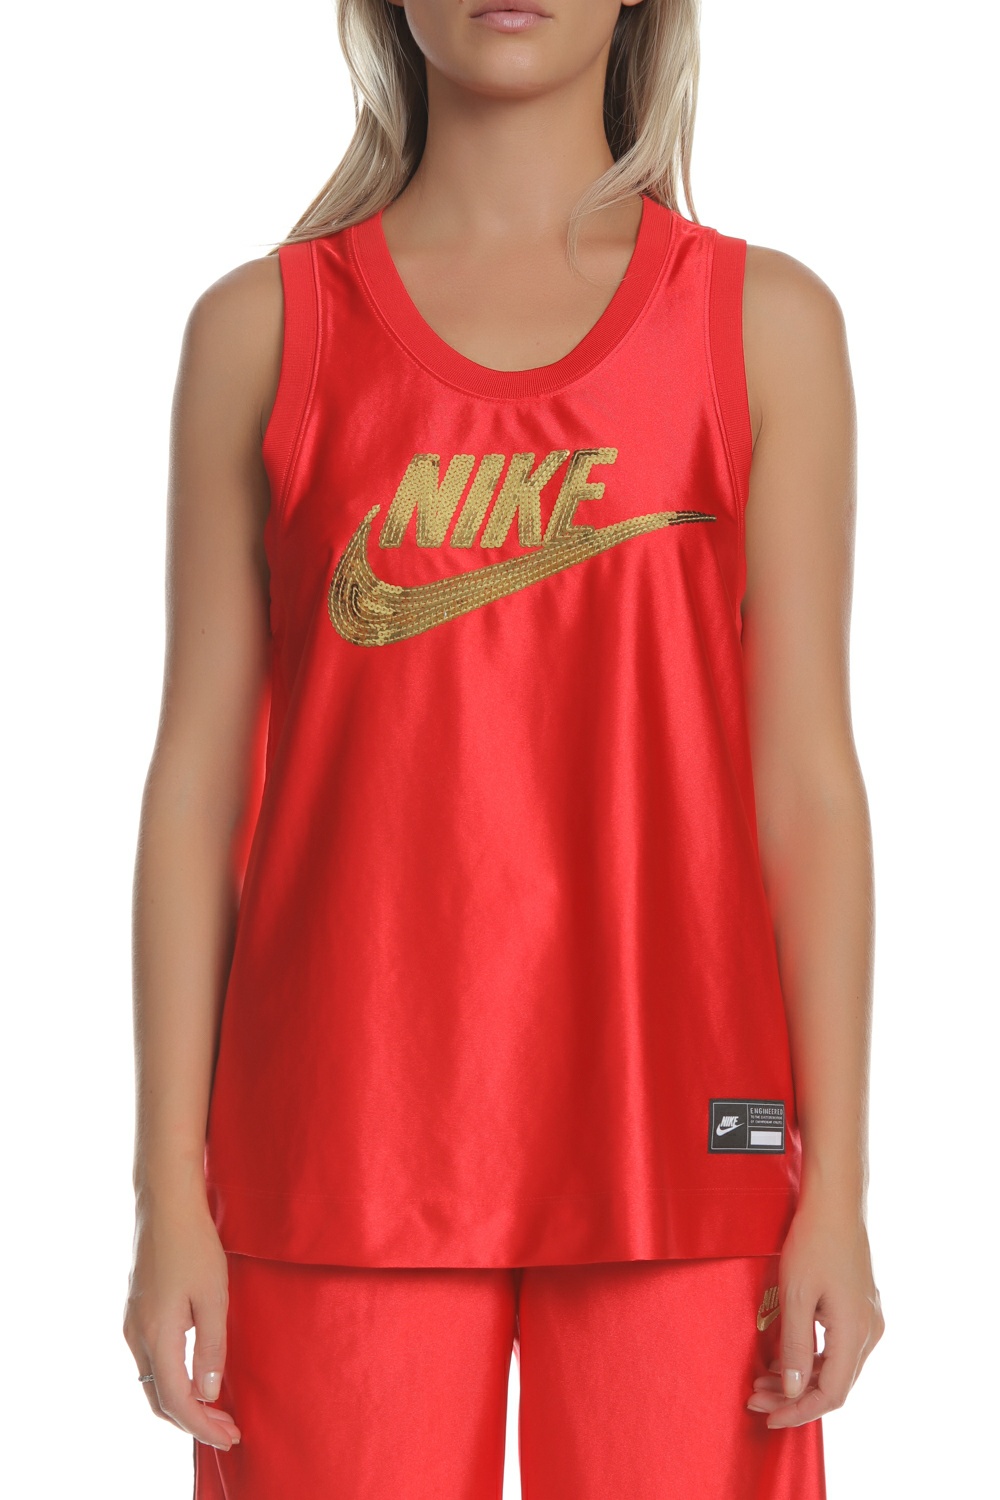 NIKE - Γυναικεία αμάνικη μπλούζα NIKE JERSEY GLM κόκκινη Γυναικεία/Ρούχα/Αθλητικά/T-shirt-Τοπ